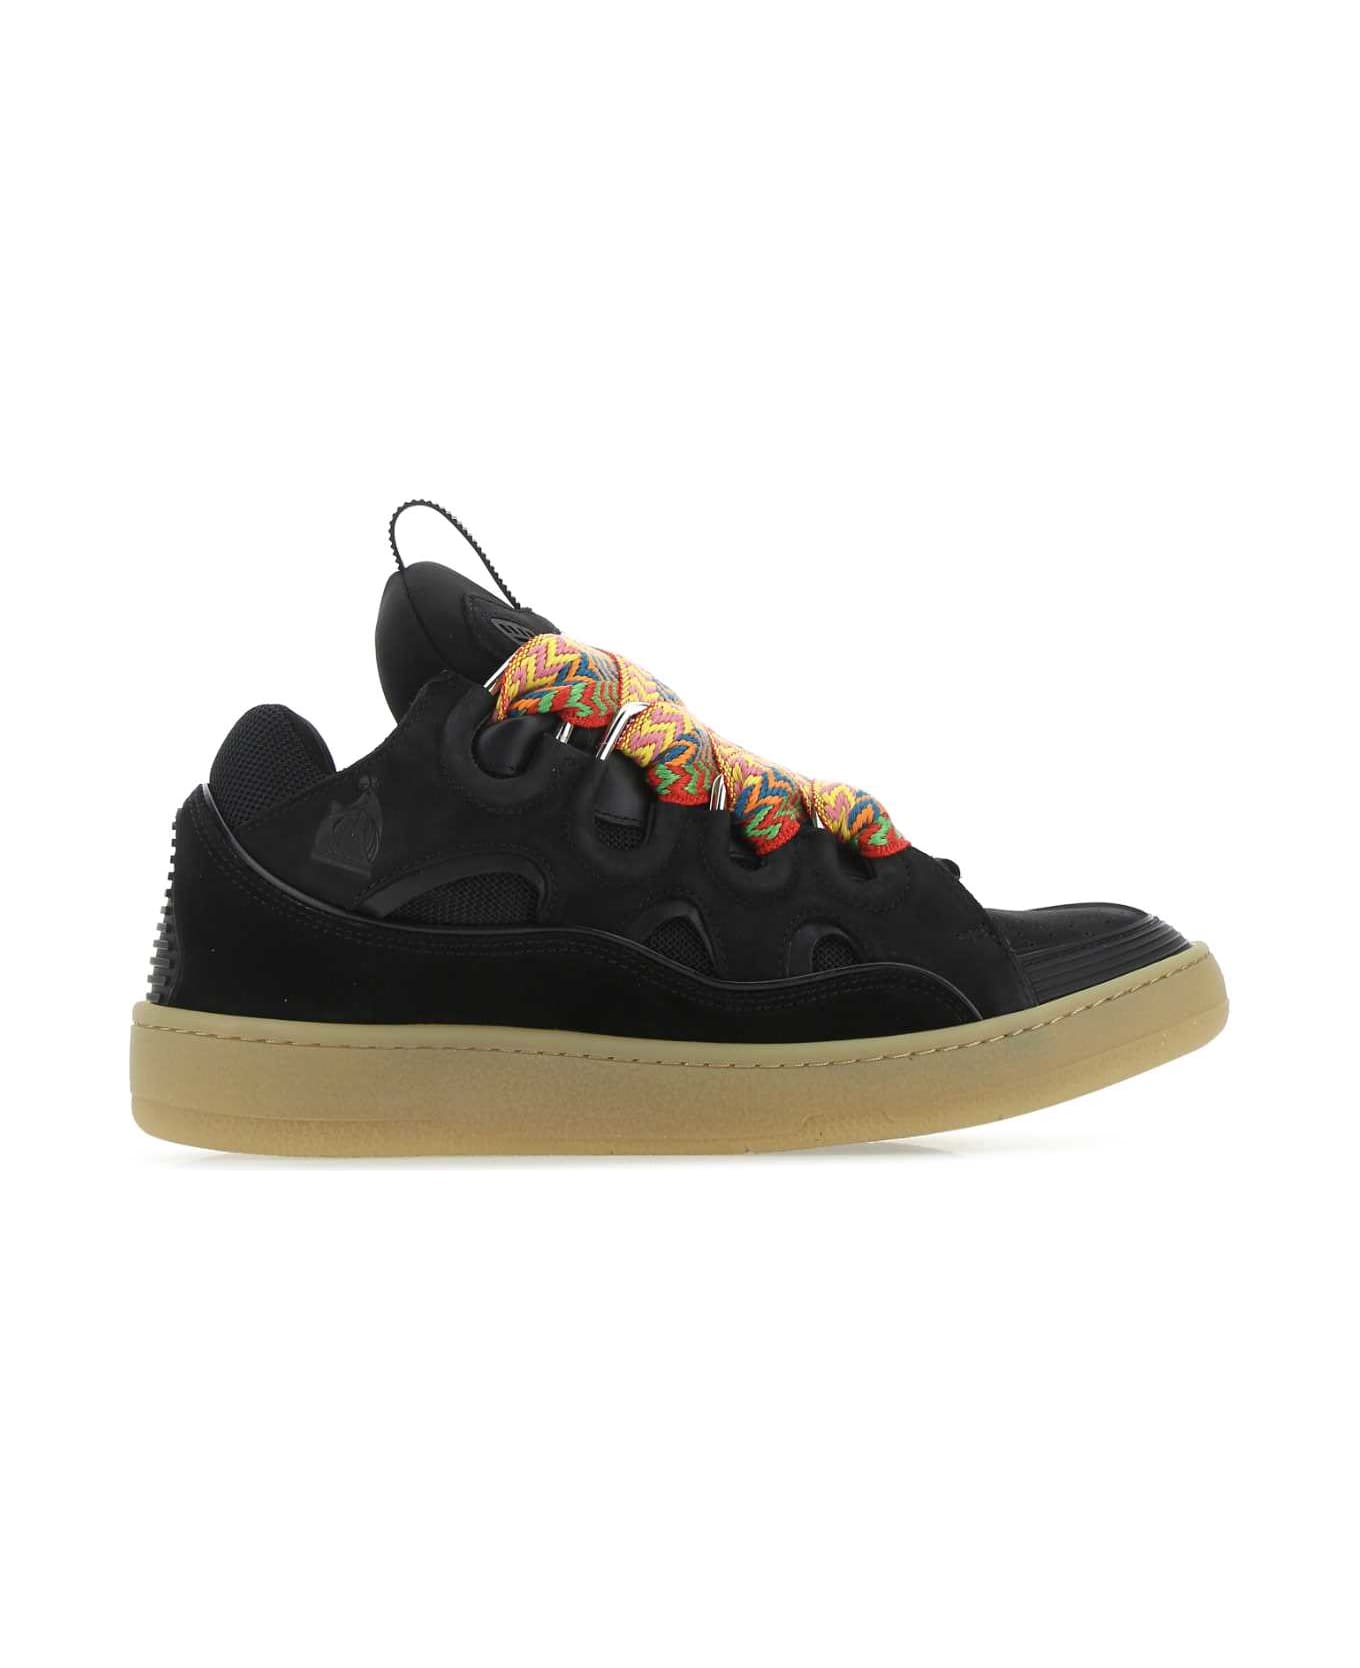 Lanvin Black Curb Sneakers - 10 スニーカー